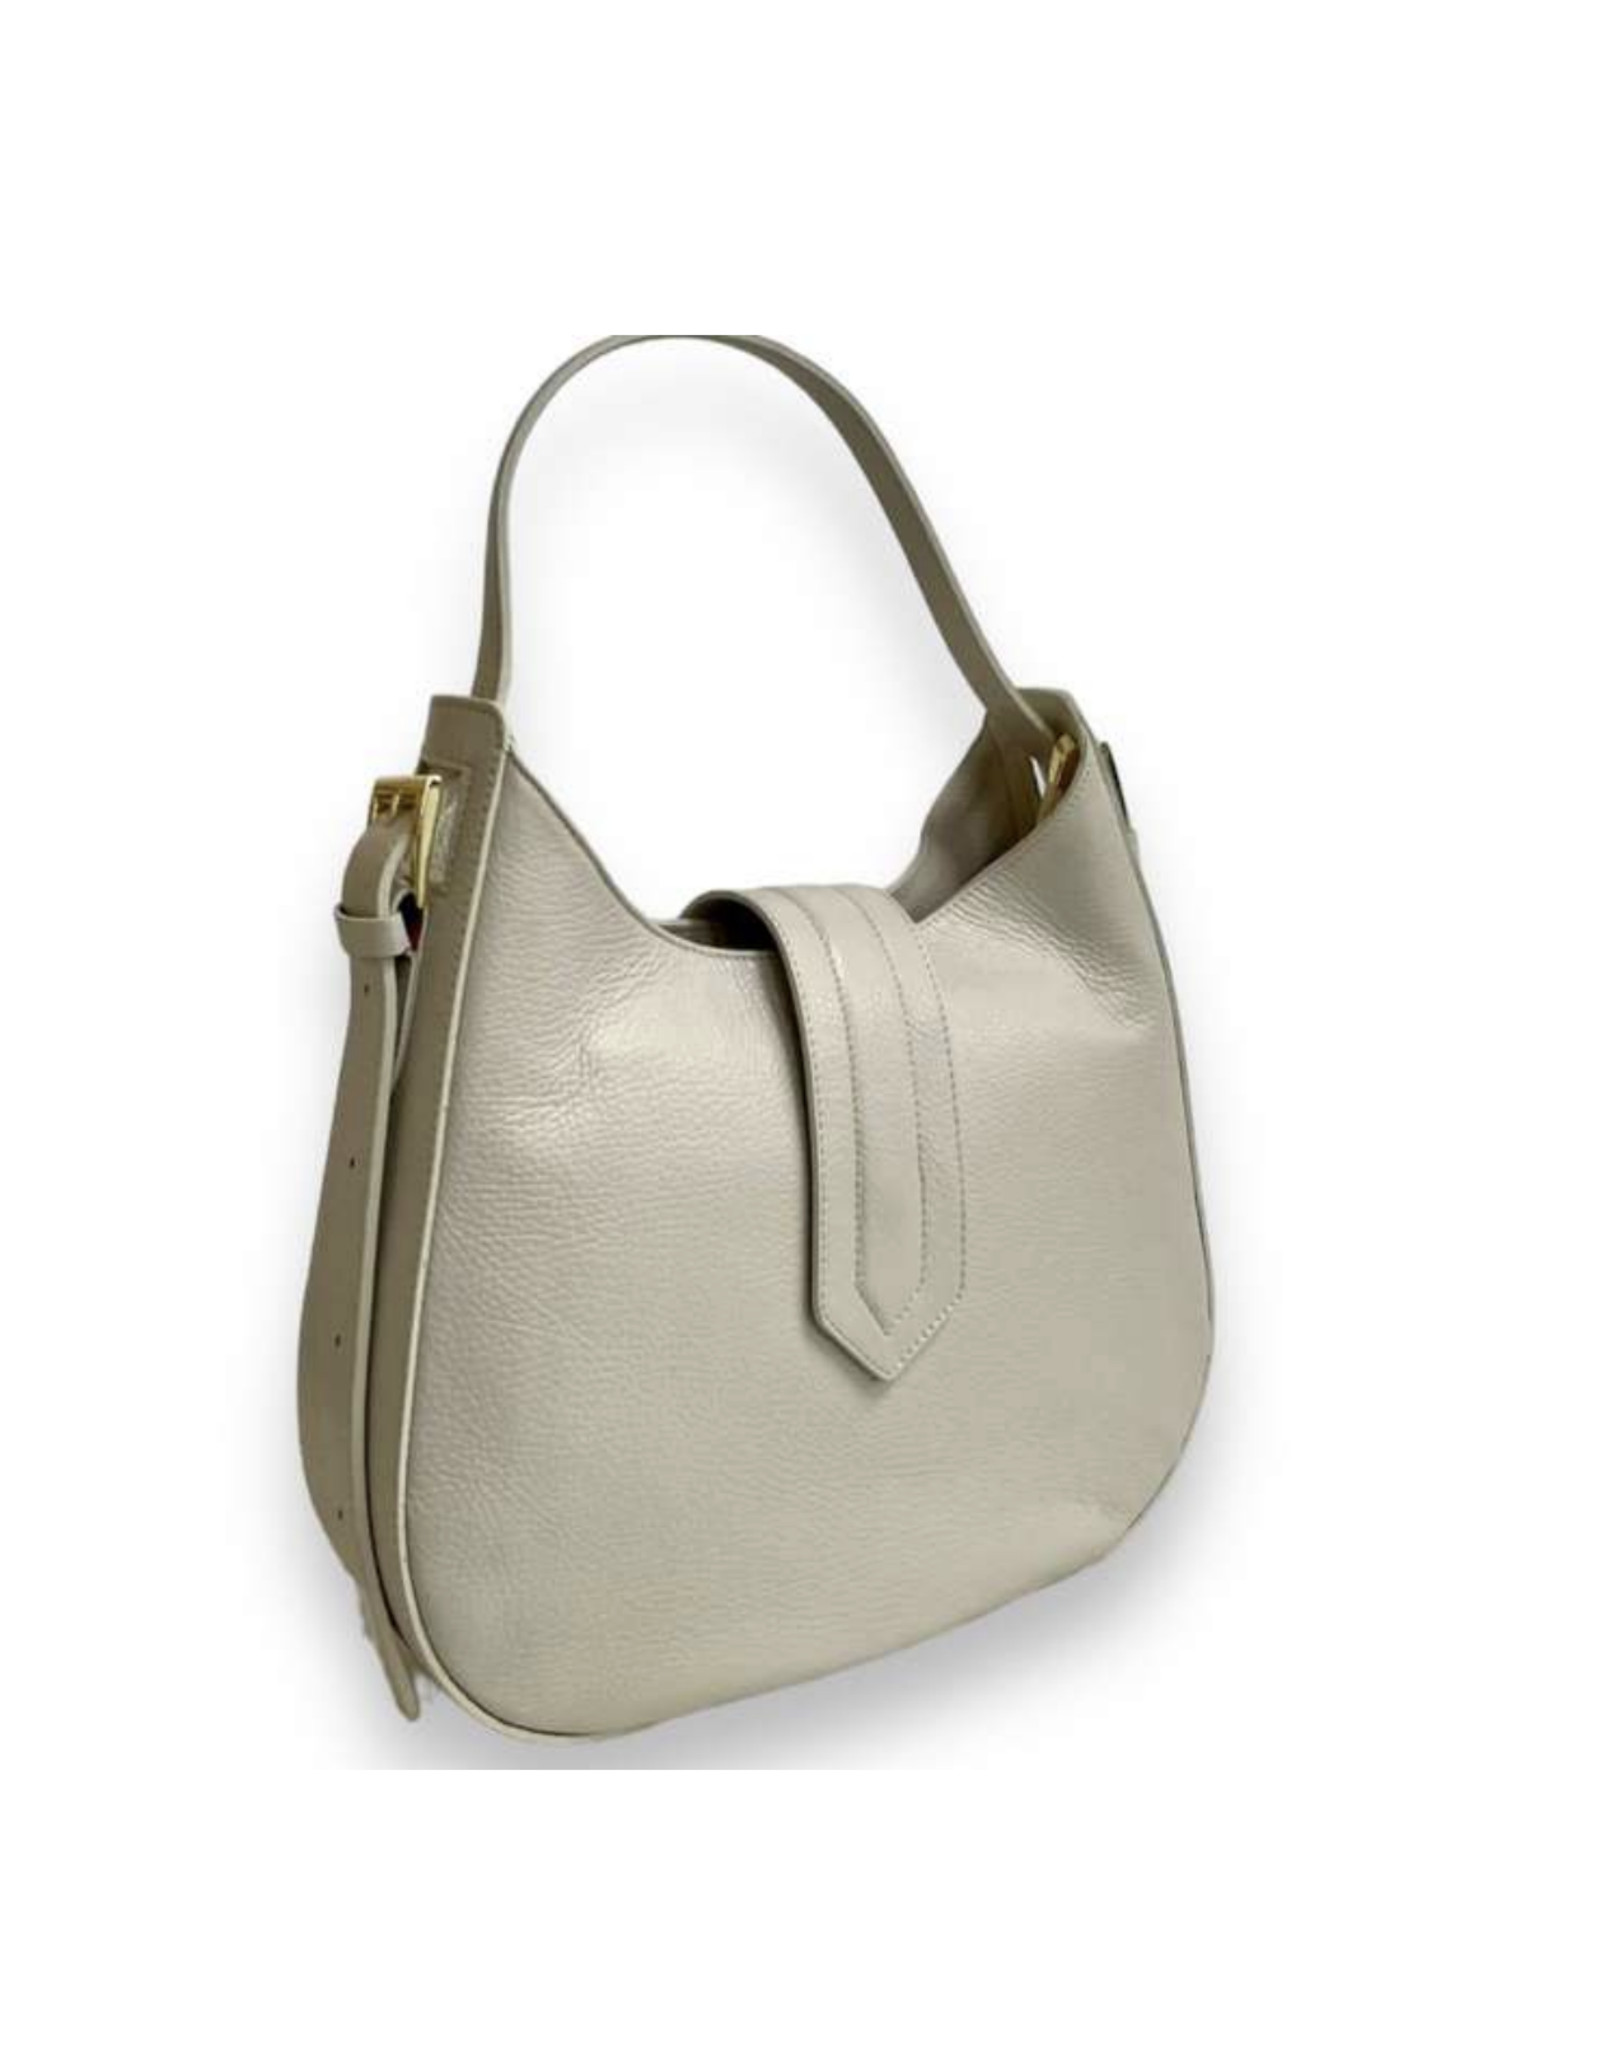 Jakarta Leather Handbag